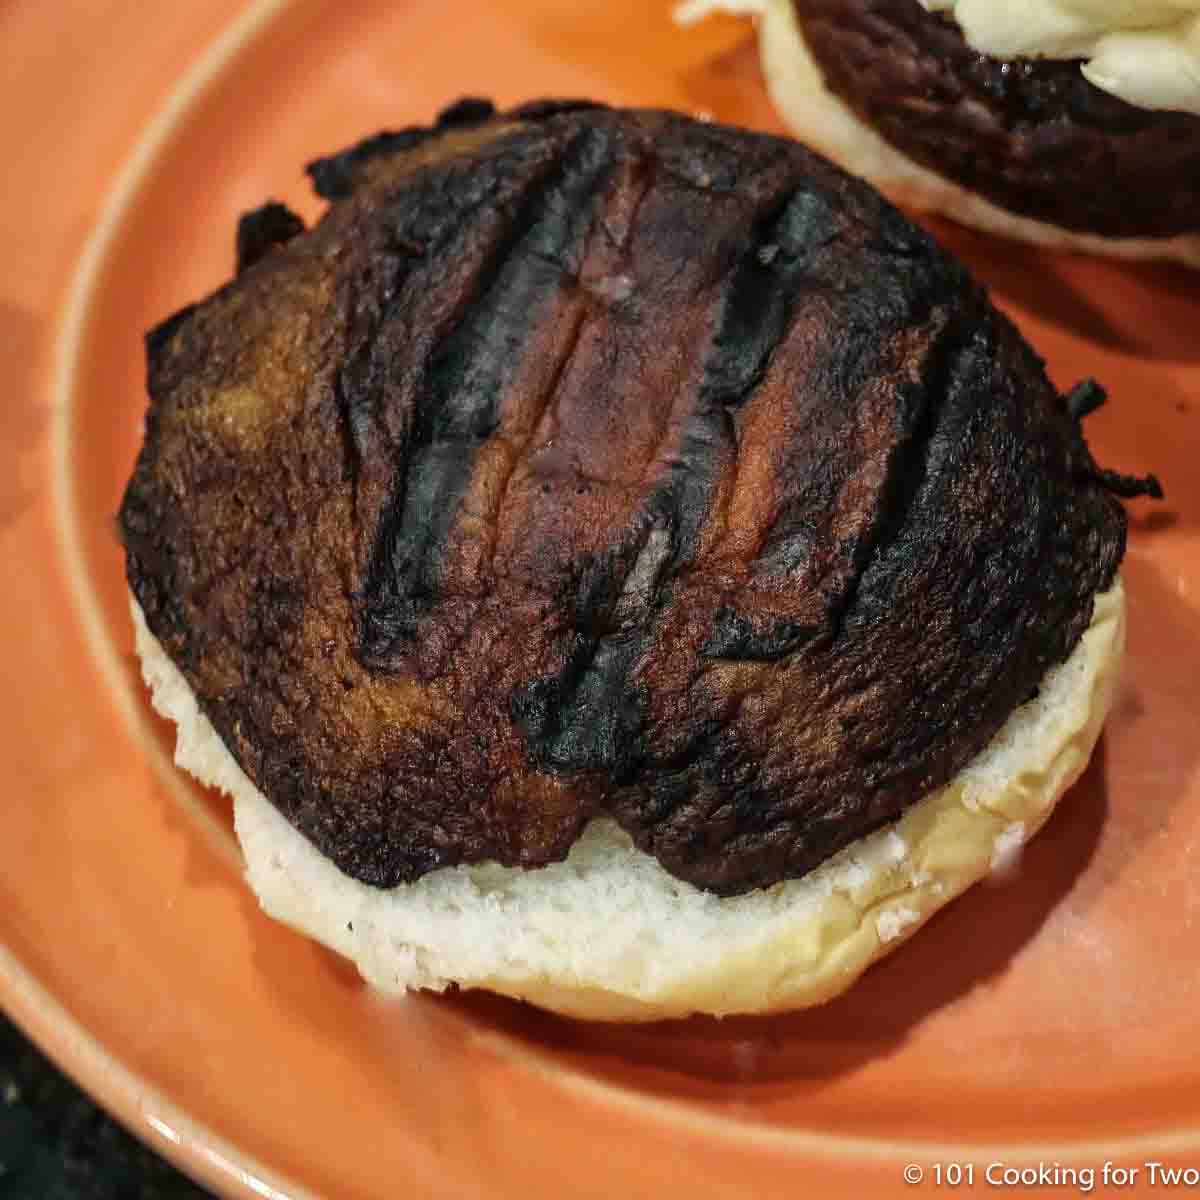 grilled portobello mushroom on a bun